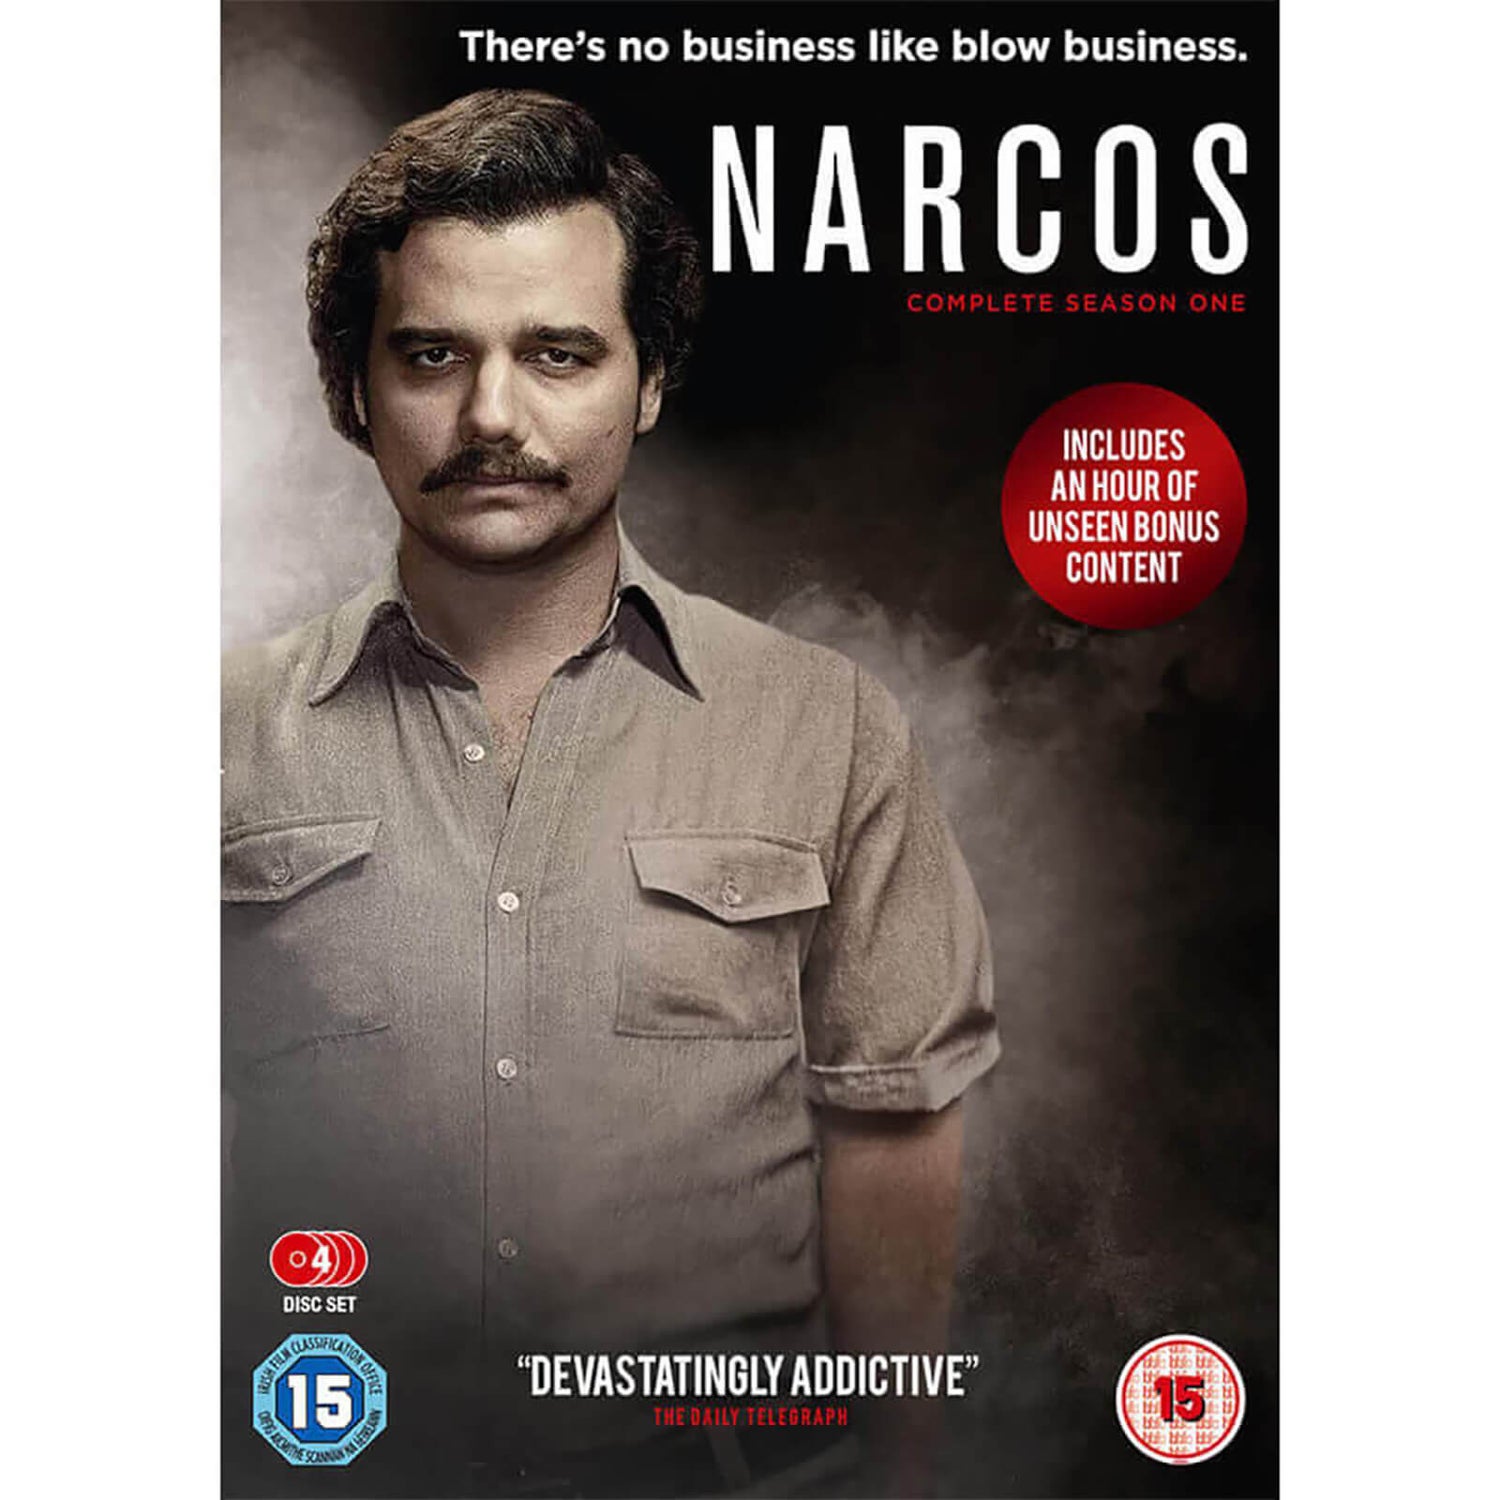 Narcos Series 1 DVD